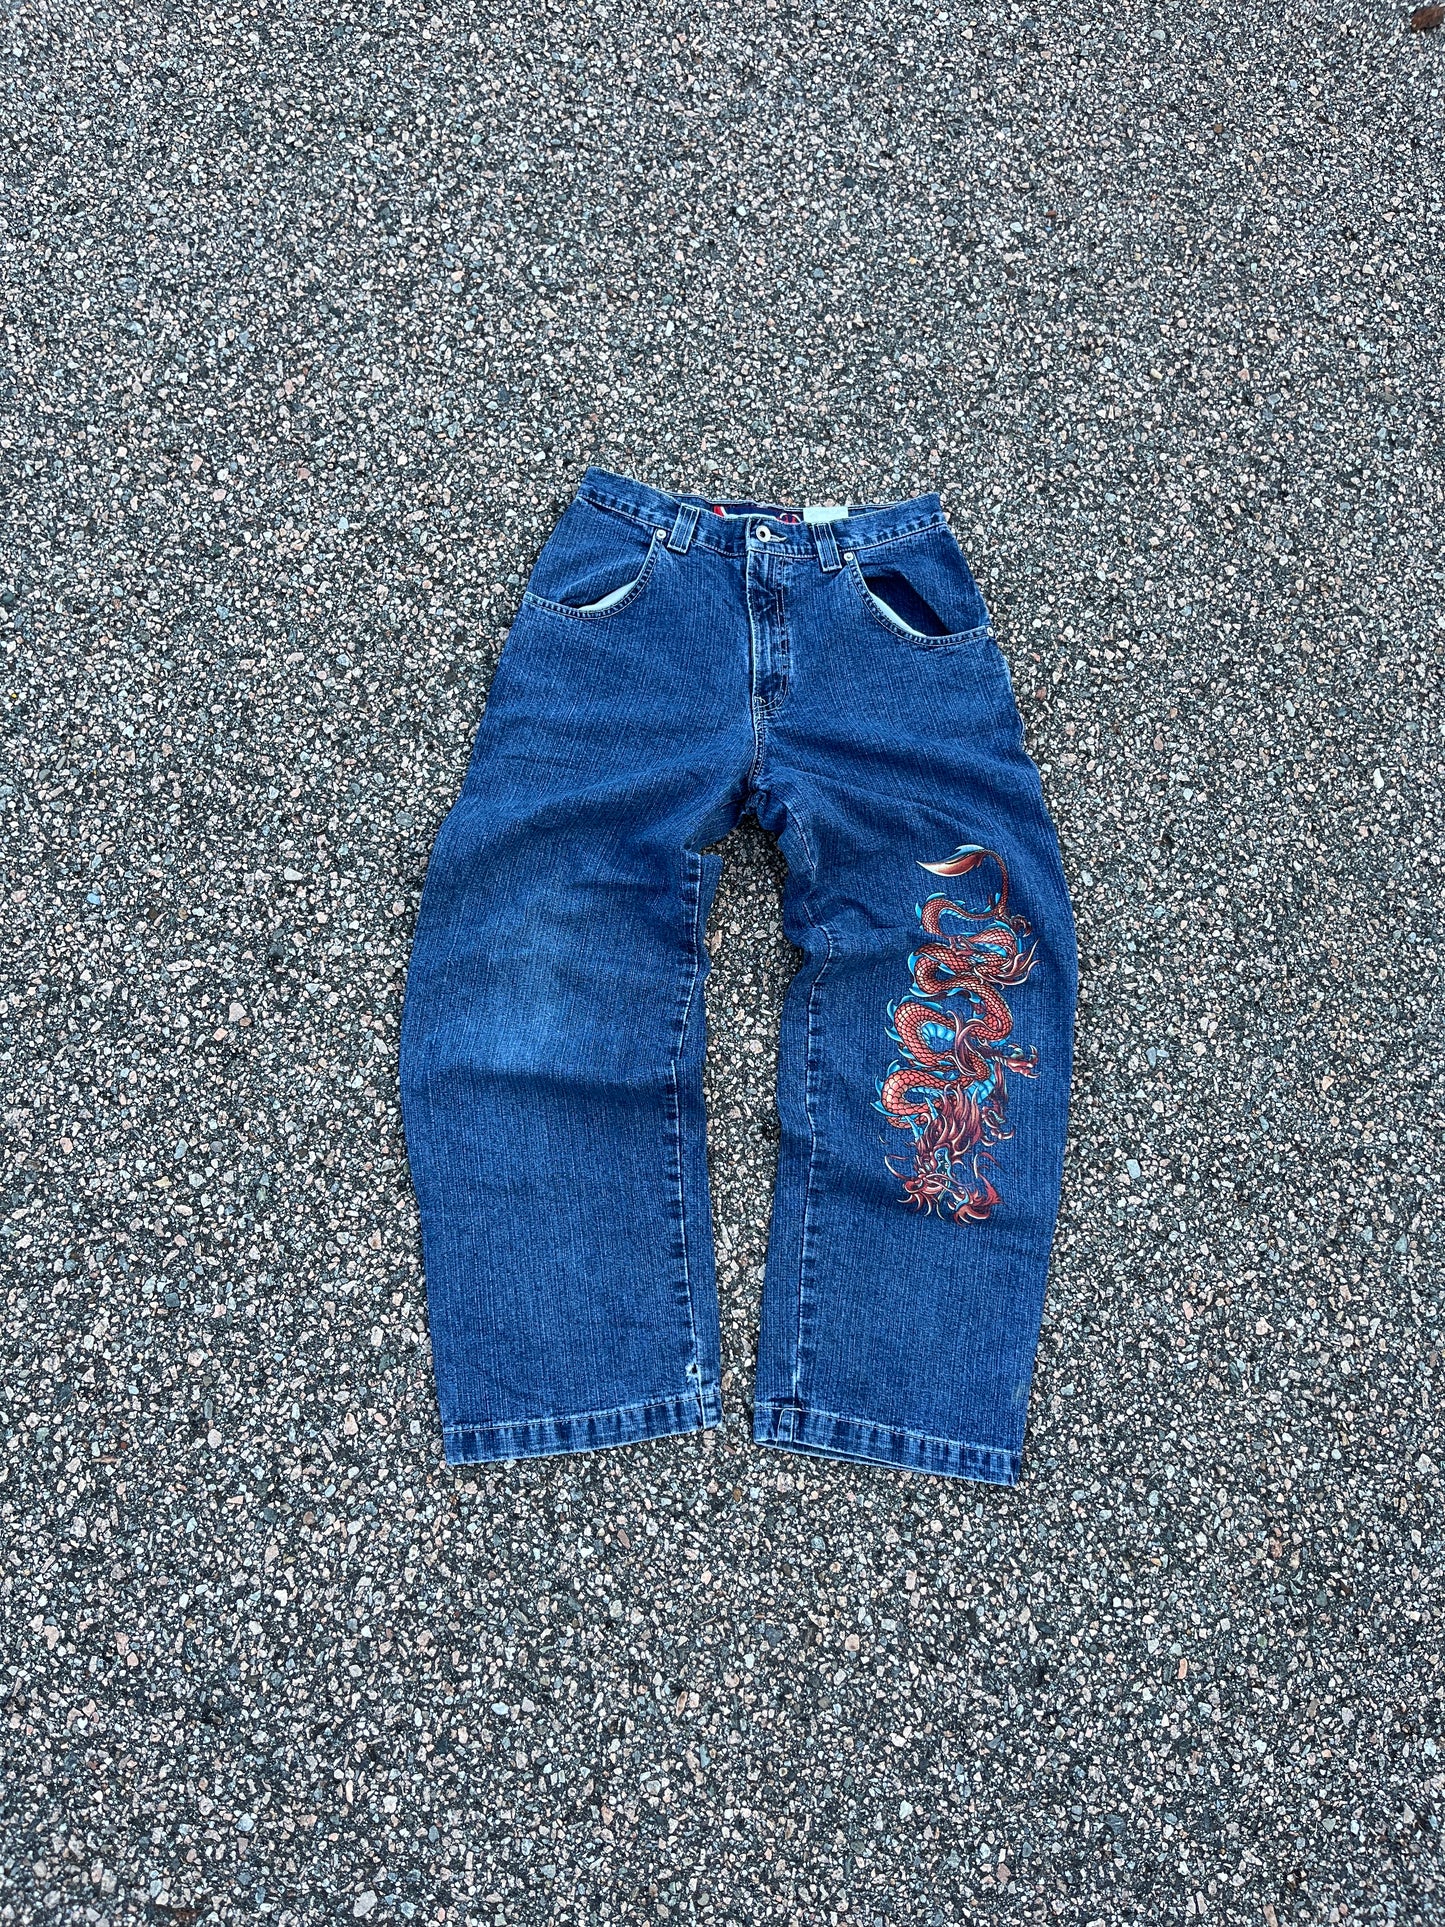 Faded Denim JNCO Dragon Pants - 29 x 29